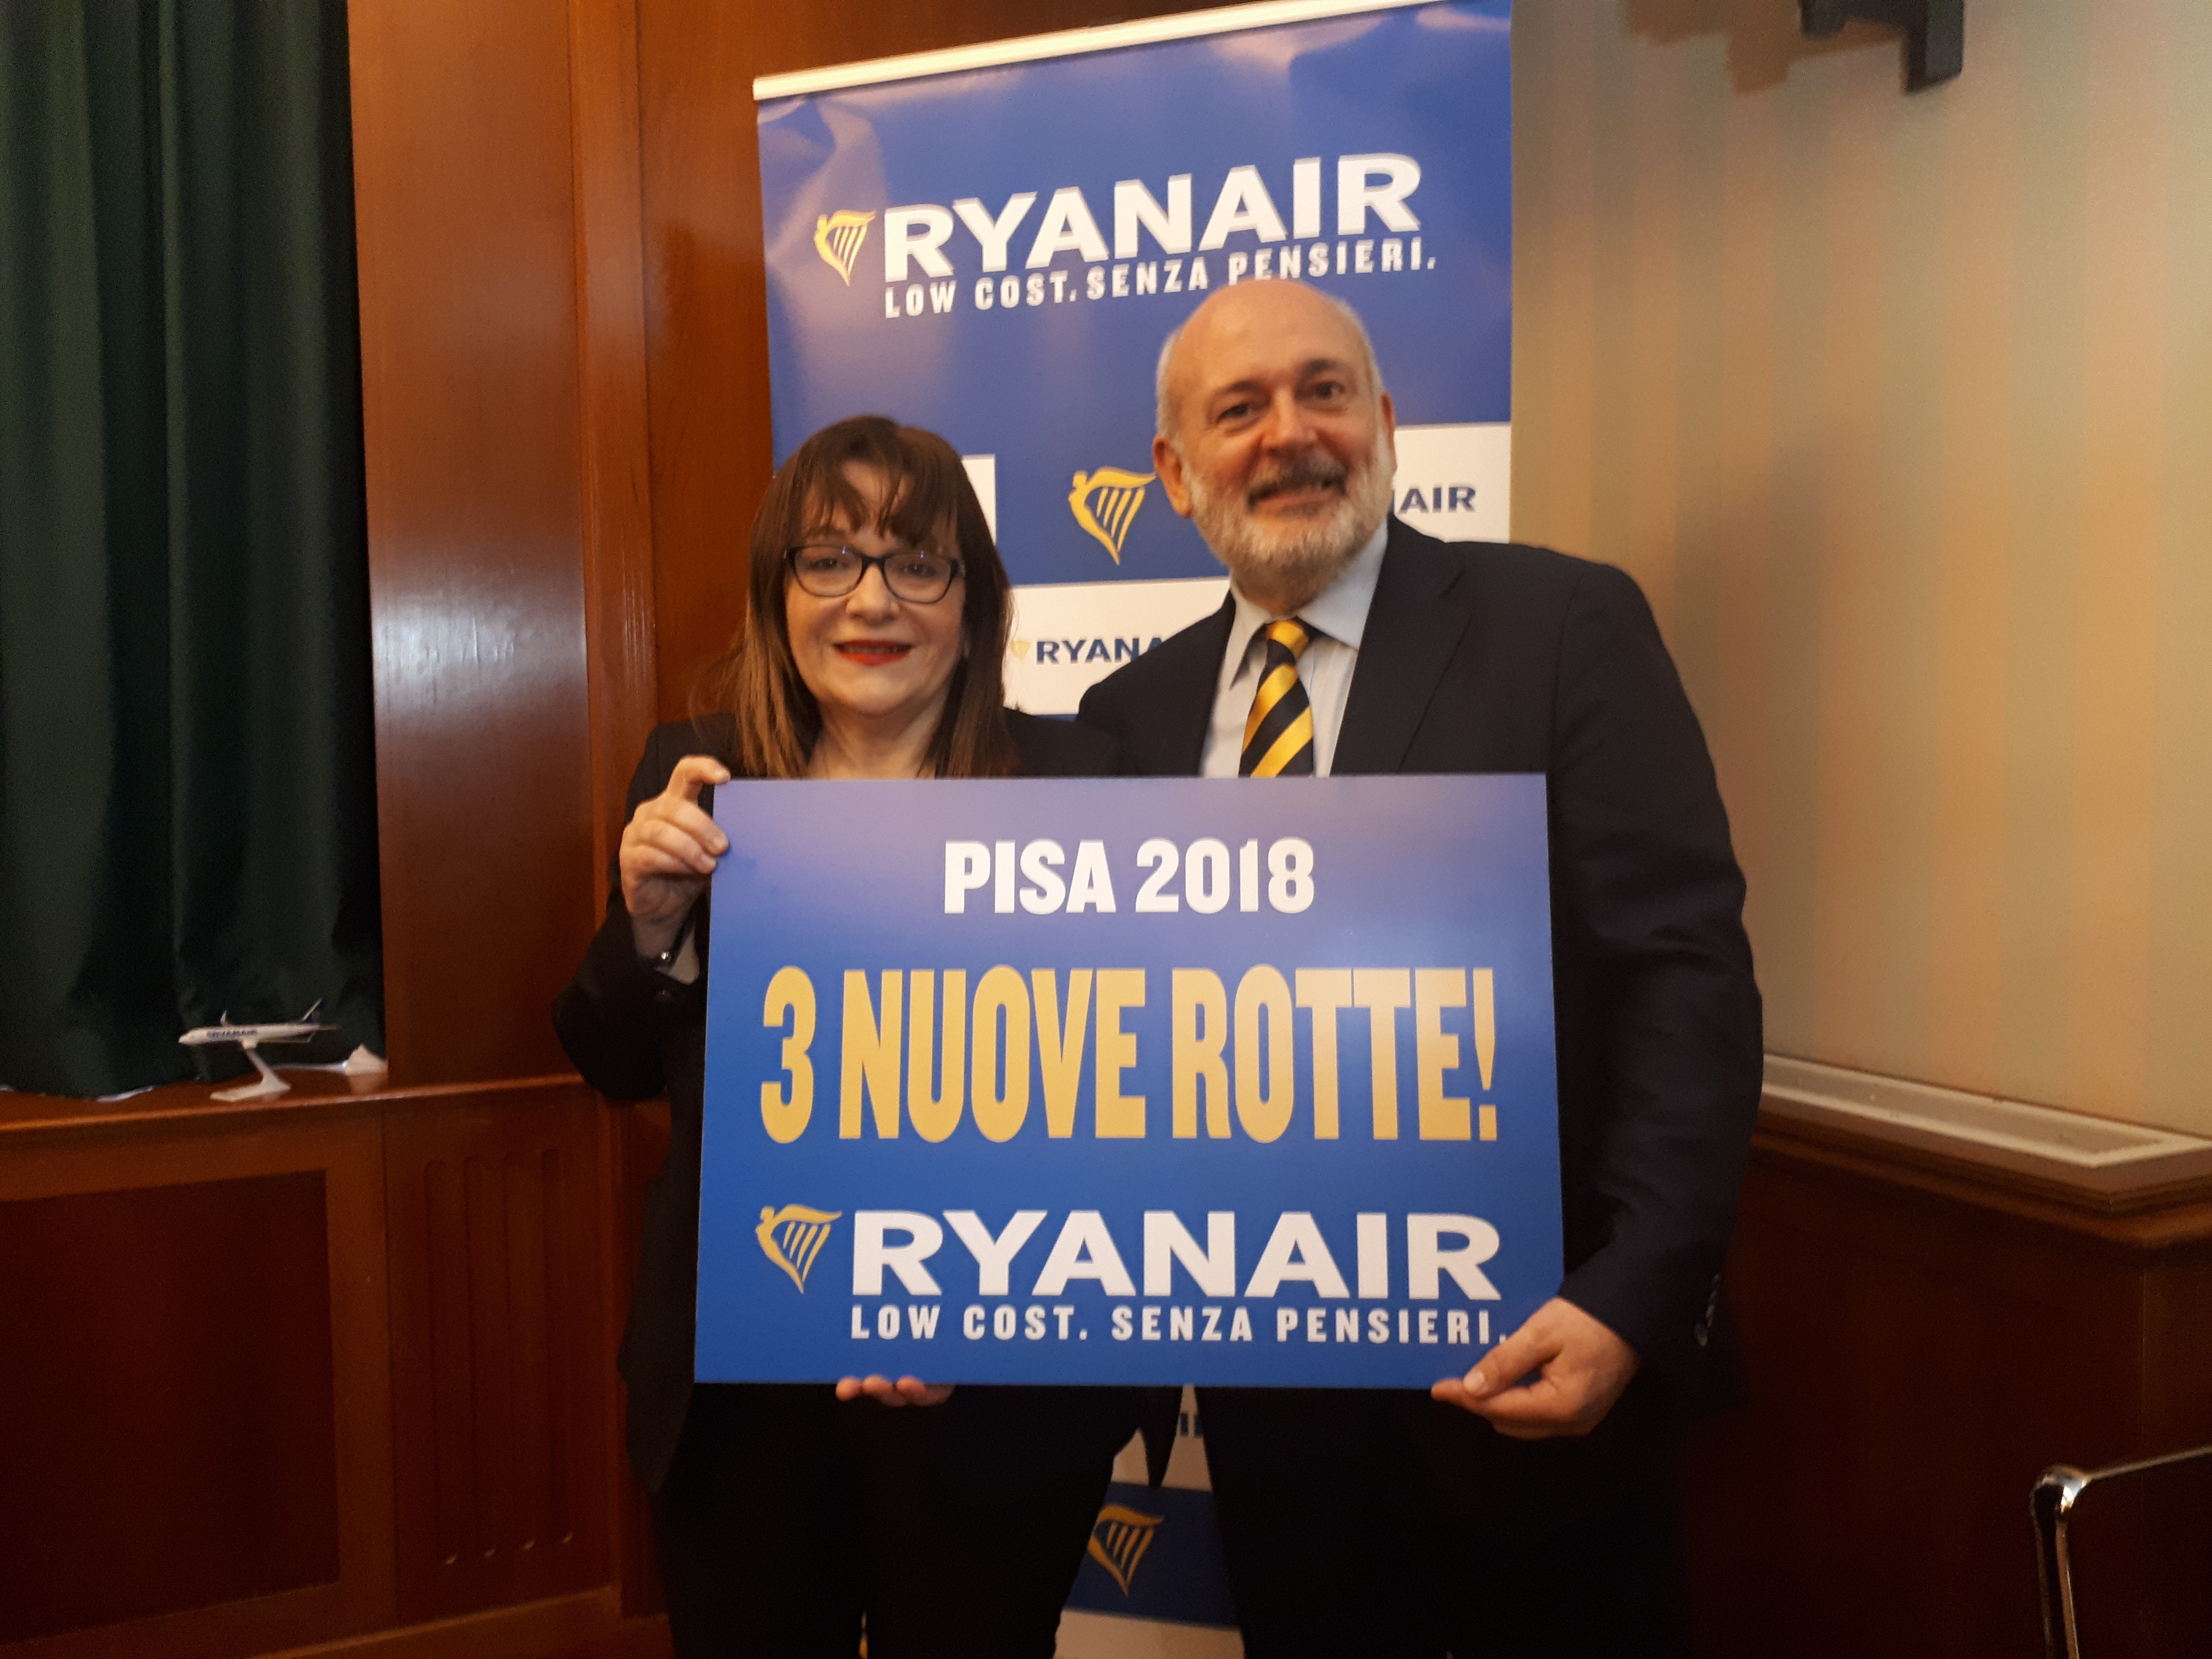 Aeroporto Galileo Galilei: tre nuove rotte per Ryanair da Pisa